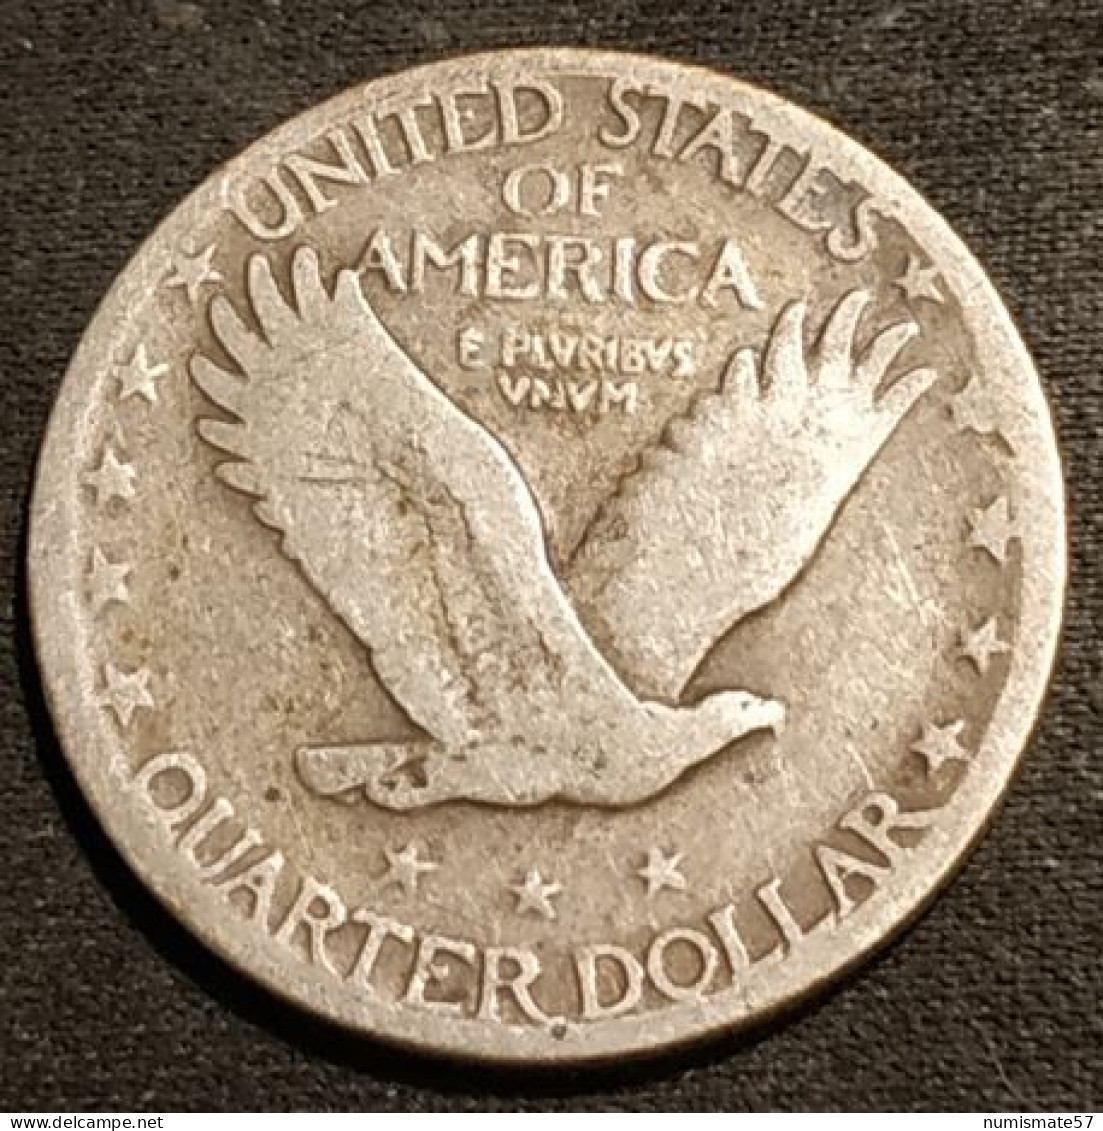 ETATS UNIS - USA - ¼ - 1/4 DOLLAR 1926 - Argent - Silver - Standing Liberty Quarter - 2nd Type - 1916-1930: Standing Liberty